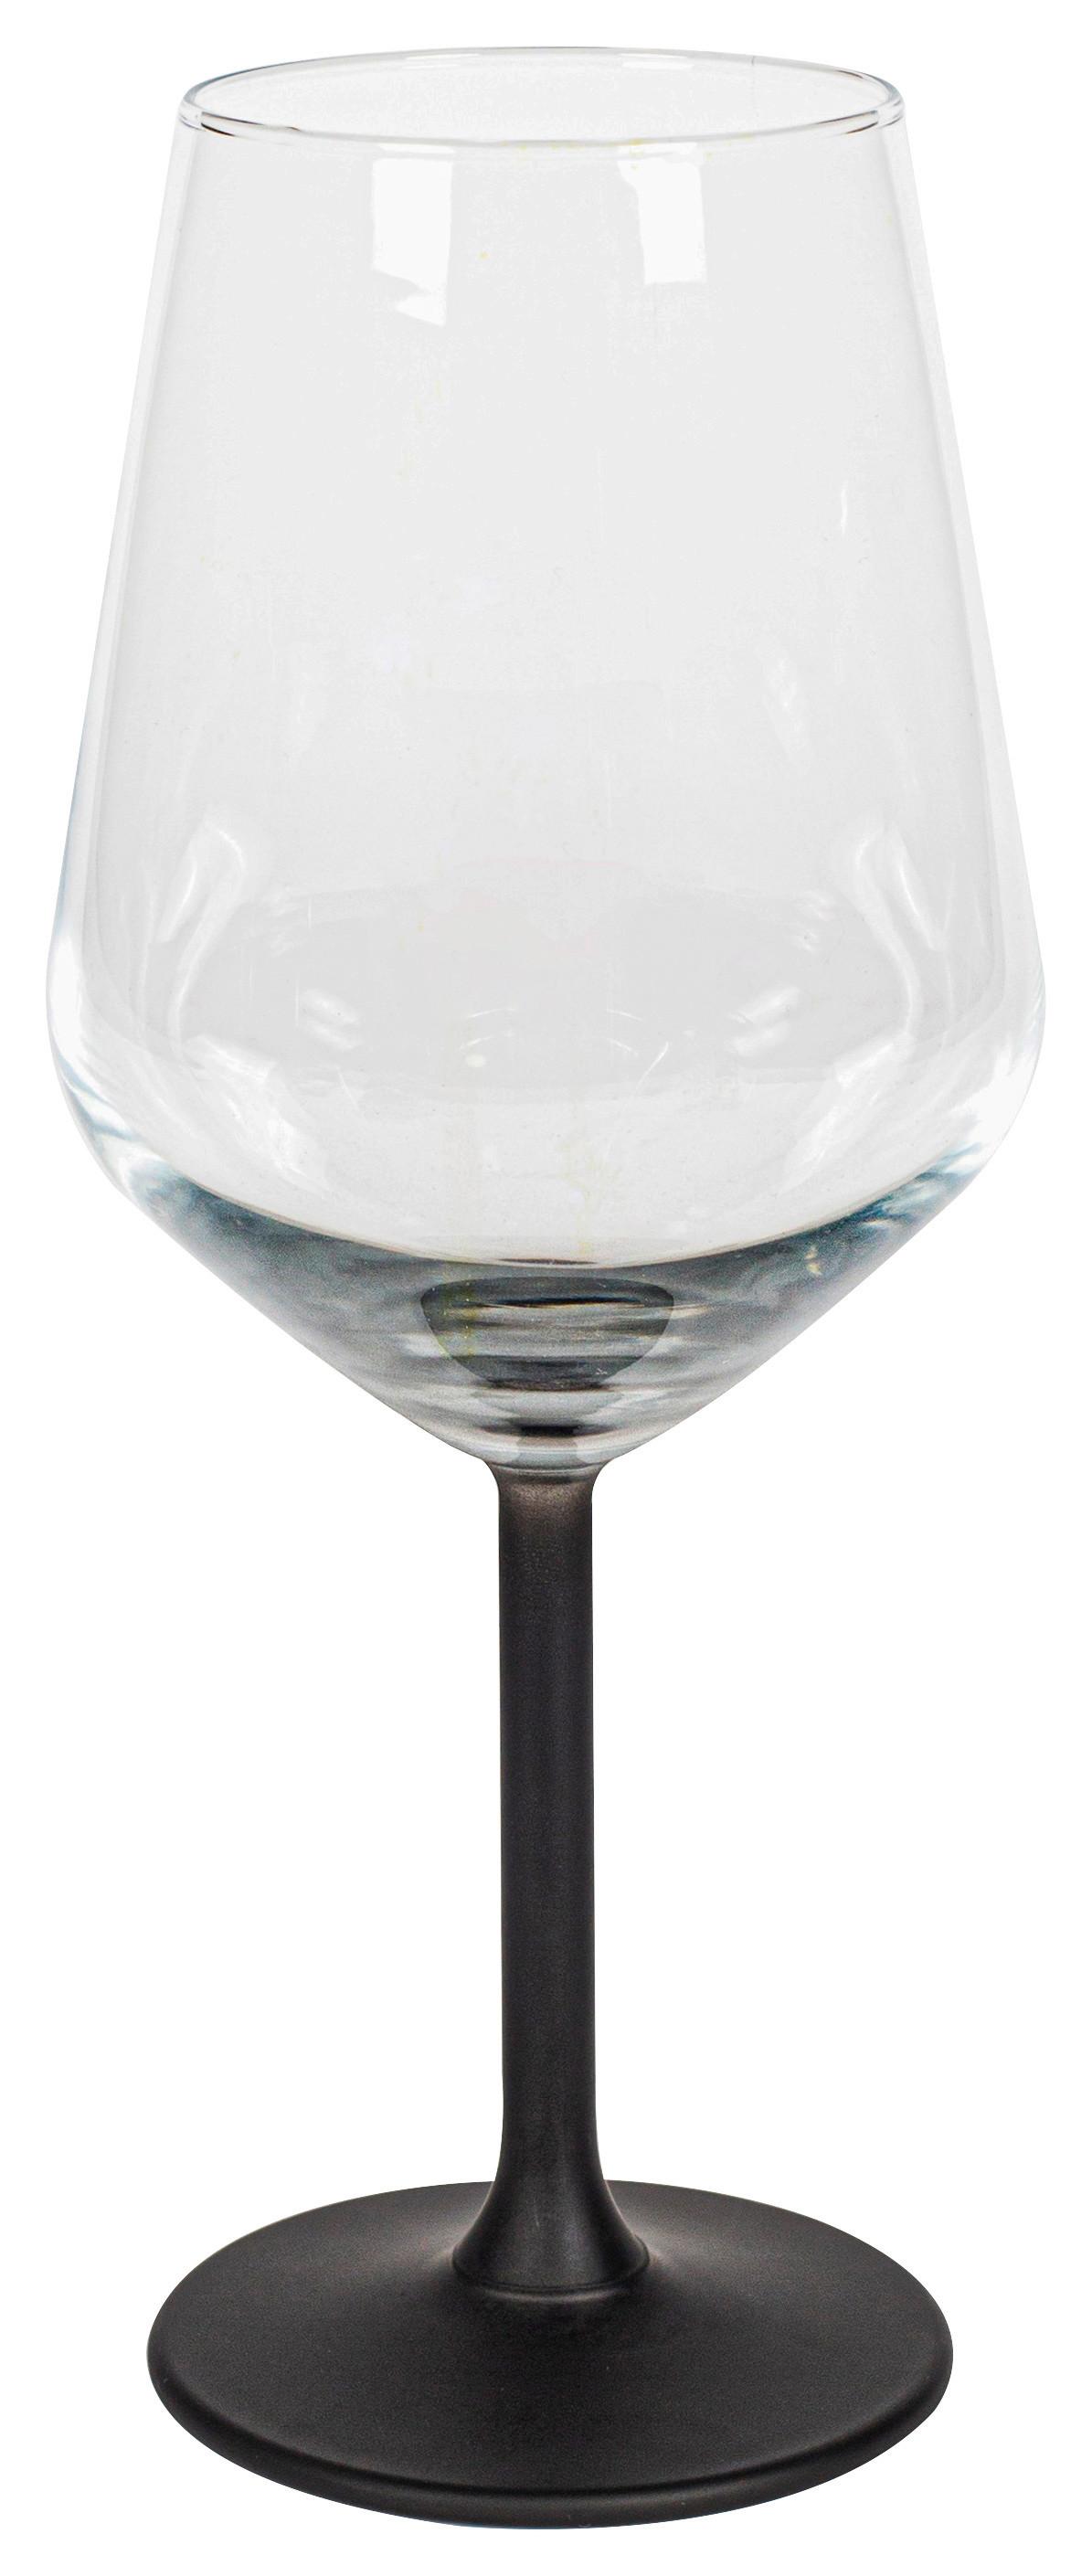 Weinglas Nini in Klar/Schwarz Ø ca. 6,4cm - Klar/Schwarz, MODERN, Glas (6,4/22cm) - Premium Living